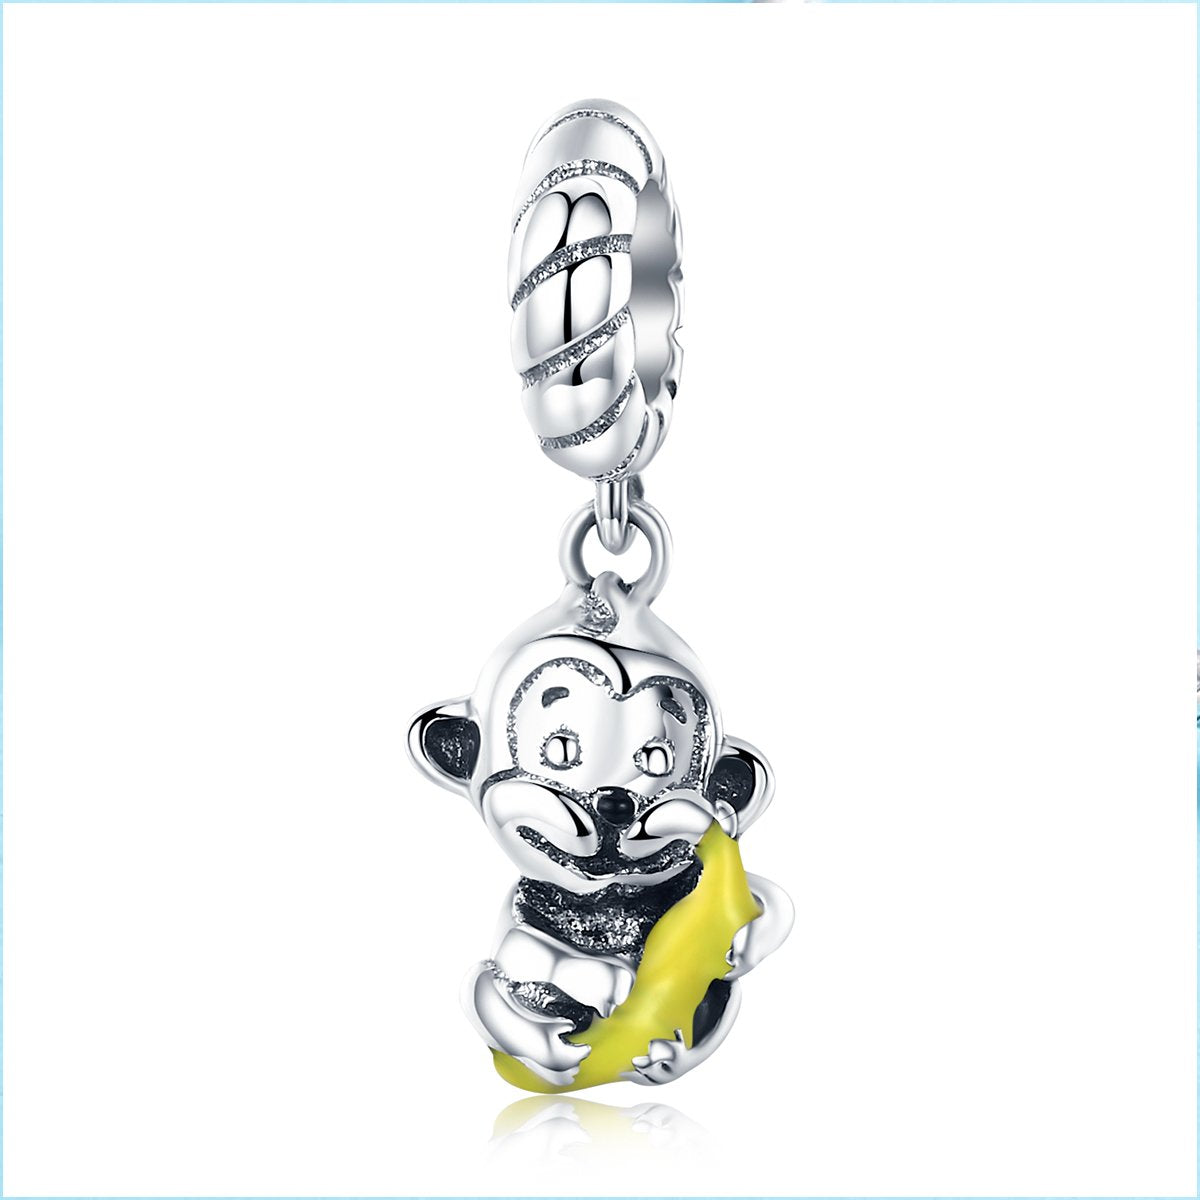 Sterling 925 silver charm the monkey and banana bead pendant fits Pandora charm and European charm bracelet Xaxe.com